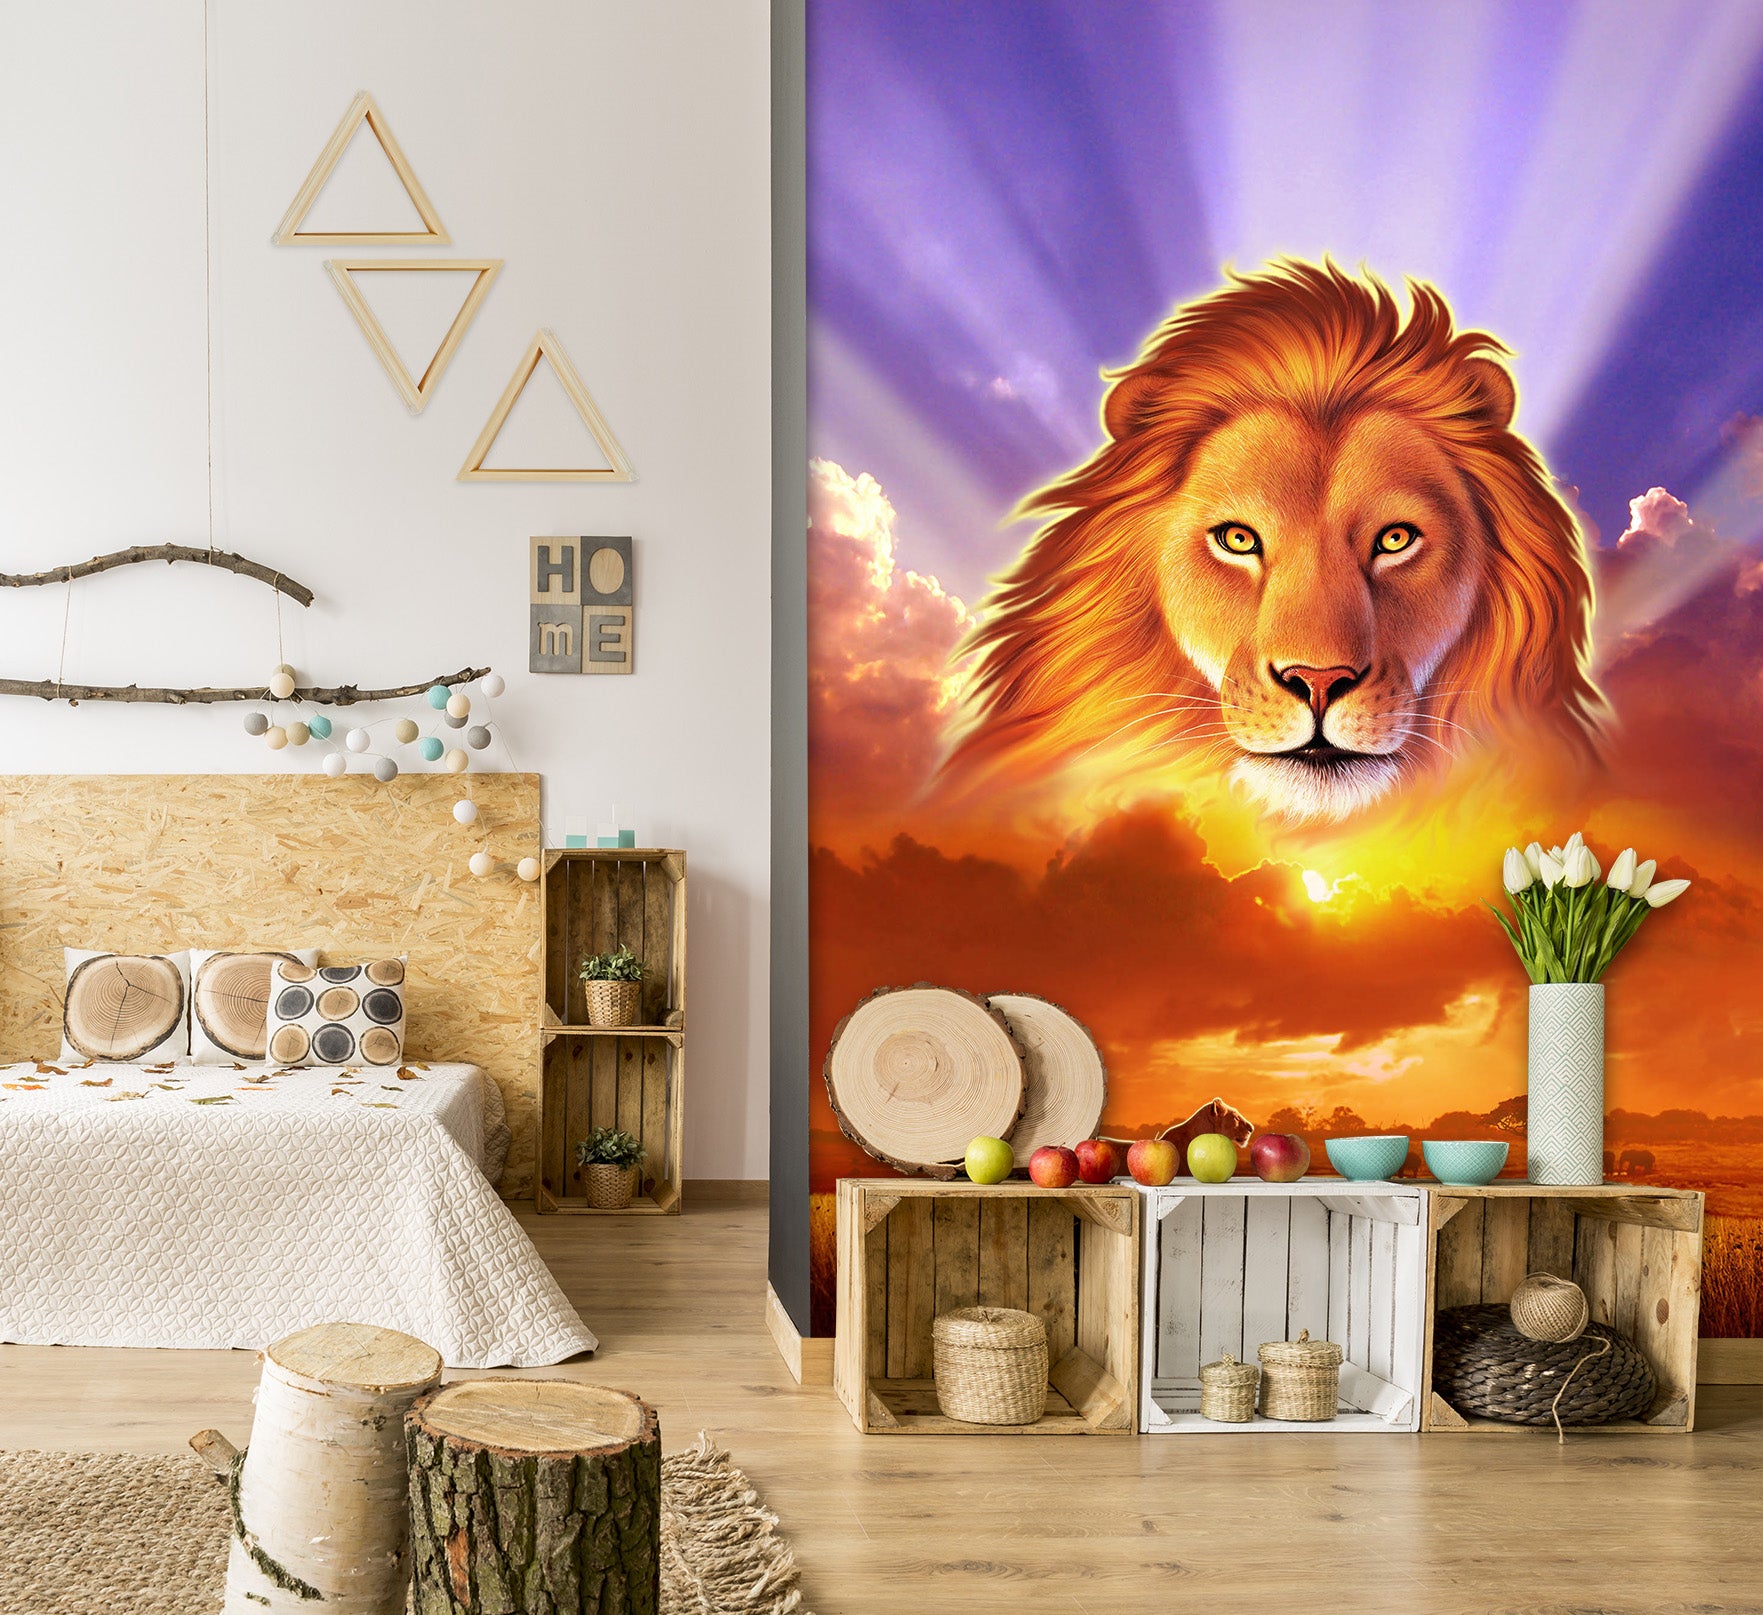 3D Lion King 1412 Jerry LoFaro Wall Mural Wall Murals